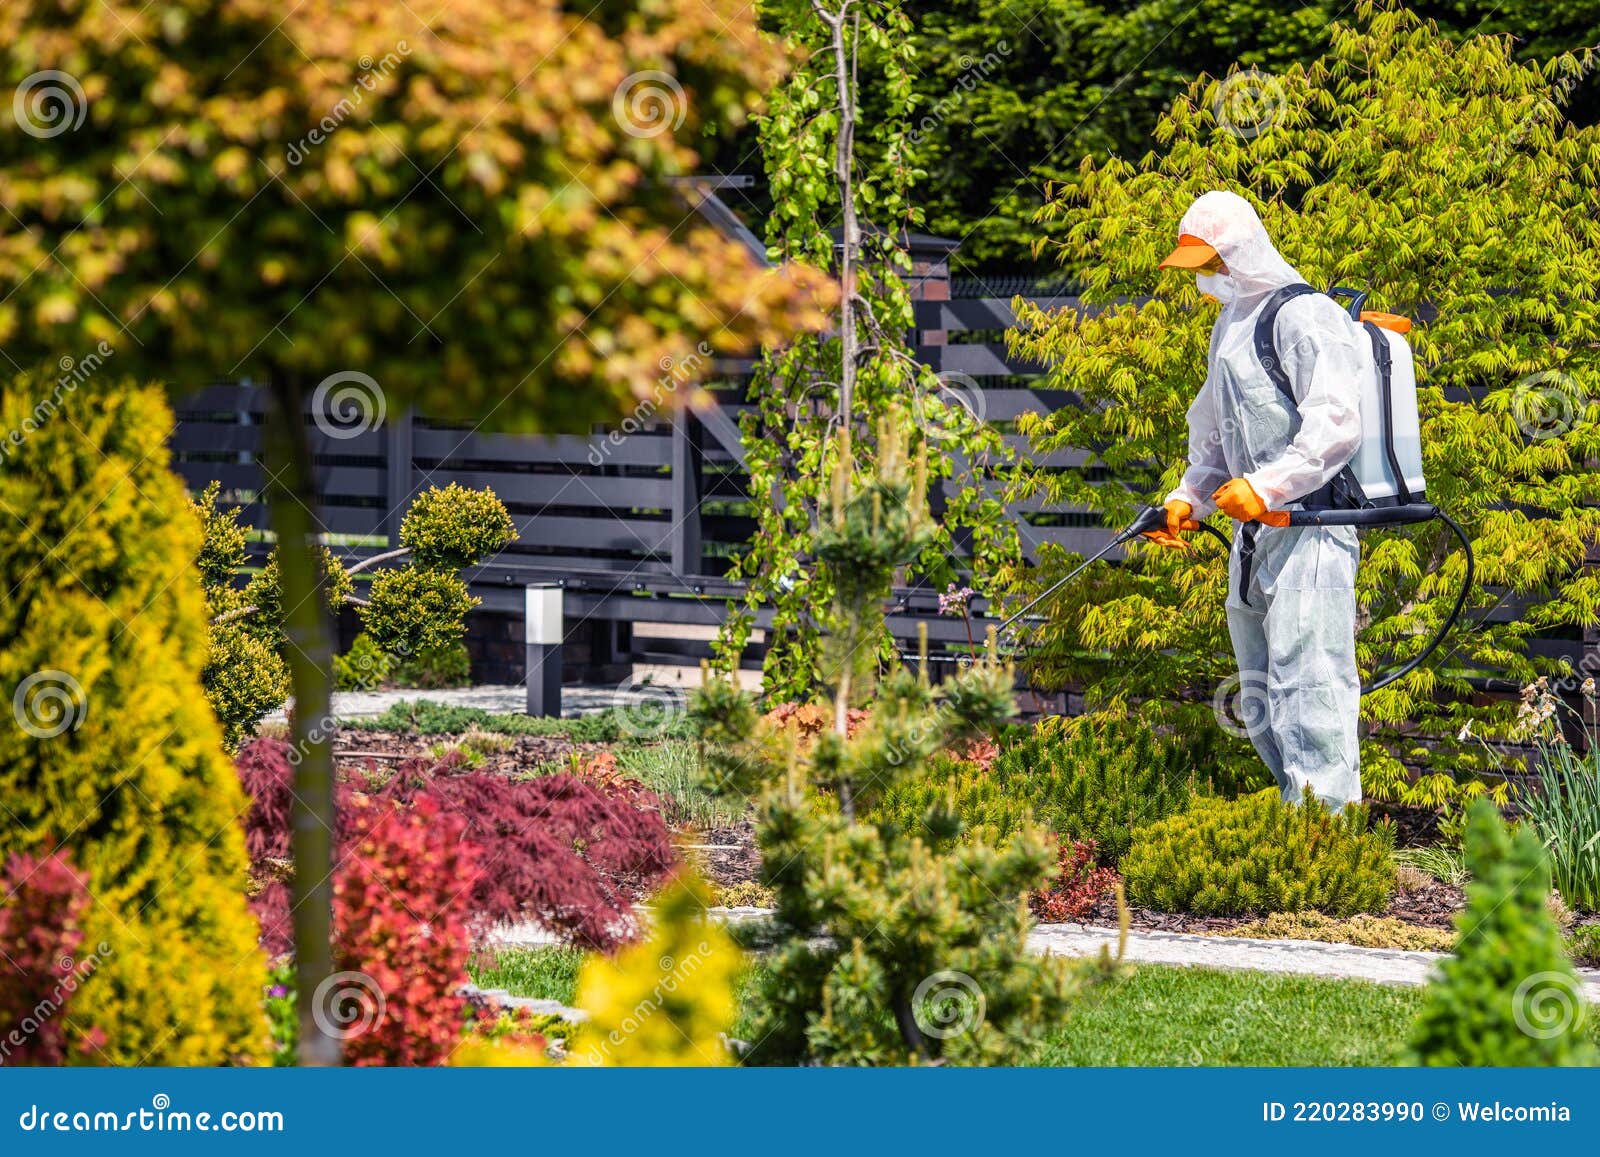 fungicides of backyard garden plants by professional garden worker